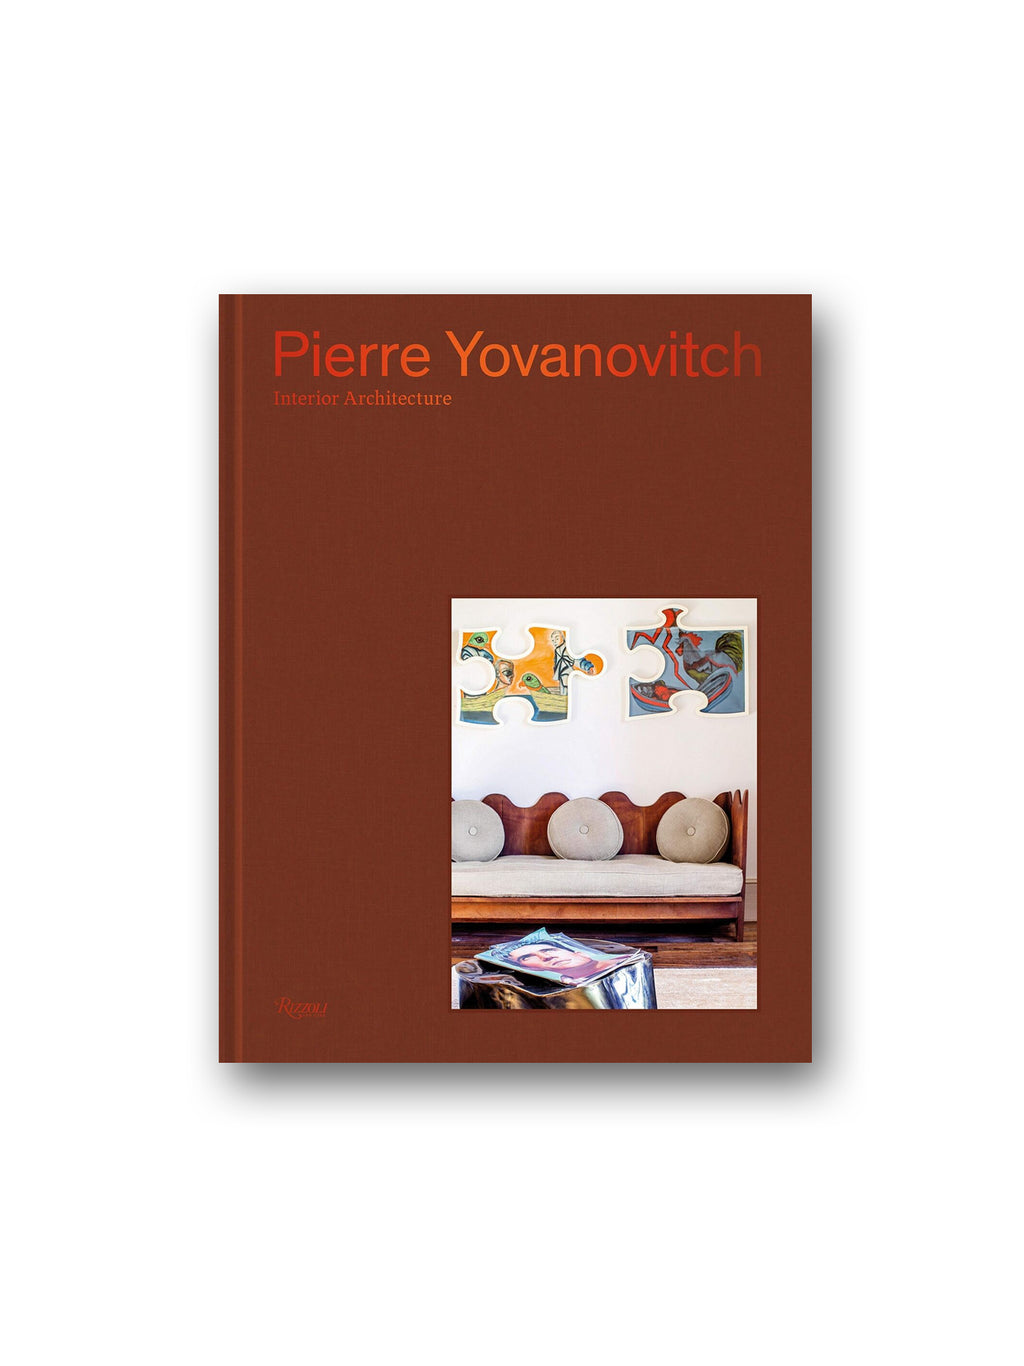 Pierre Yovanovitch: Interior Architecture